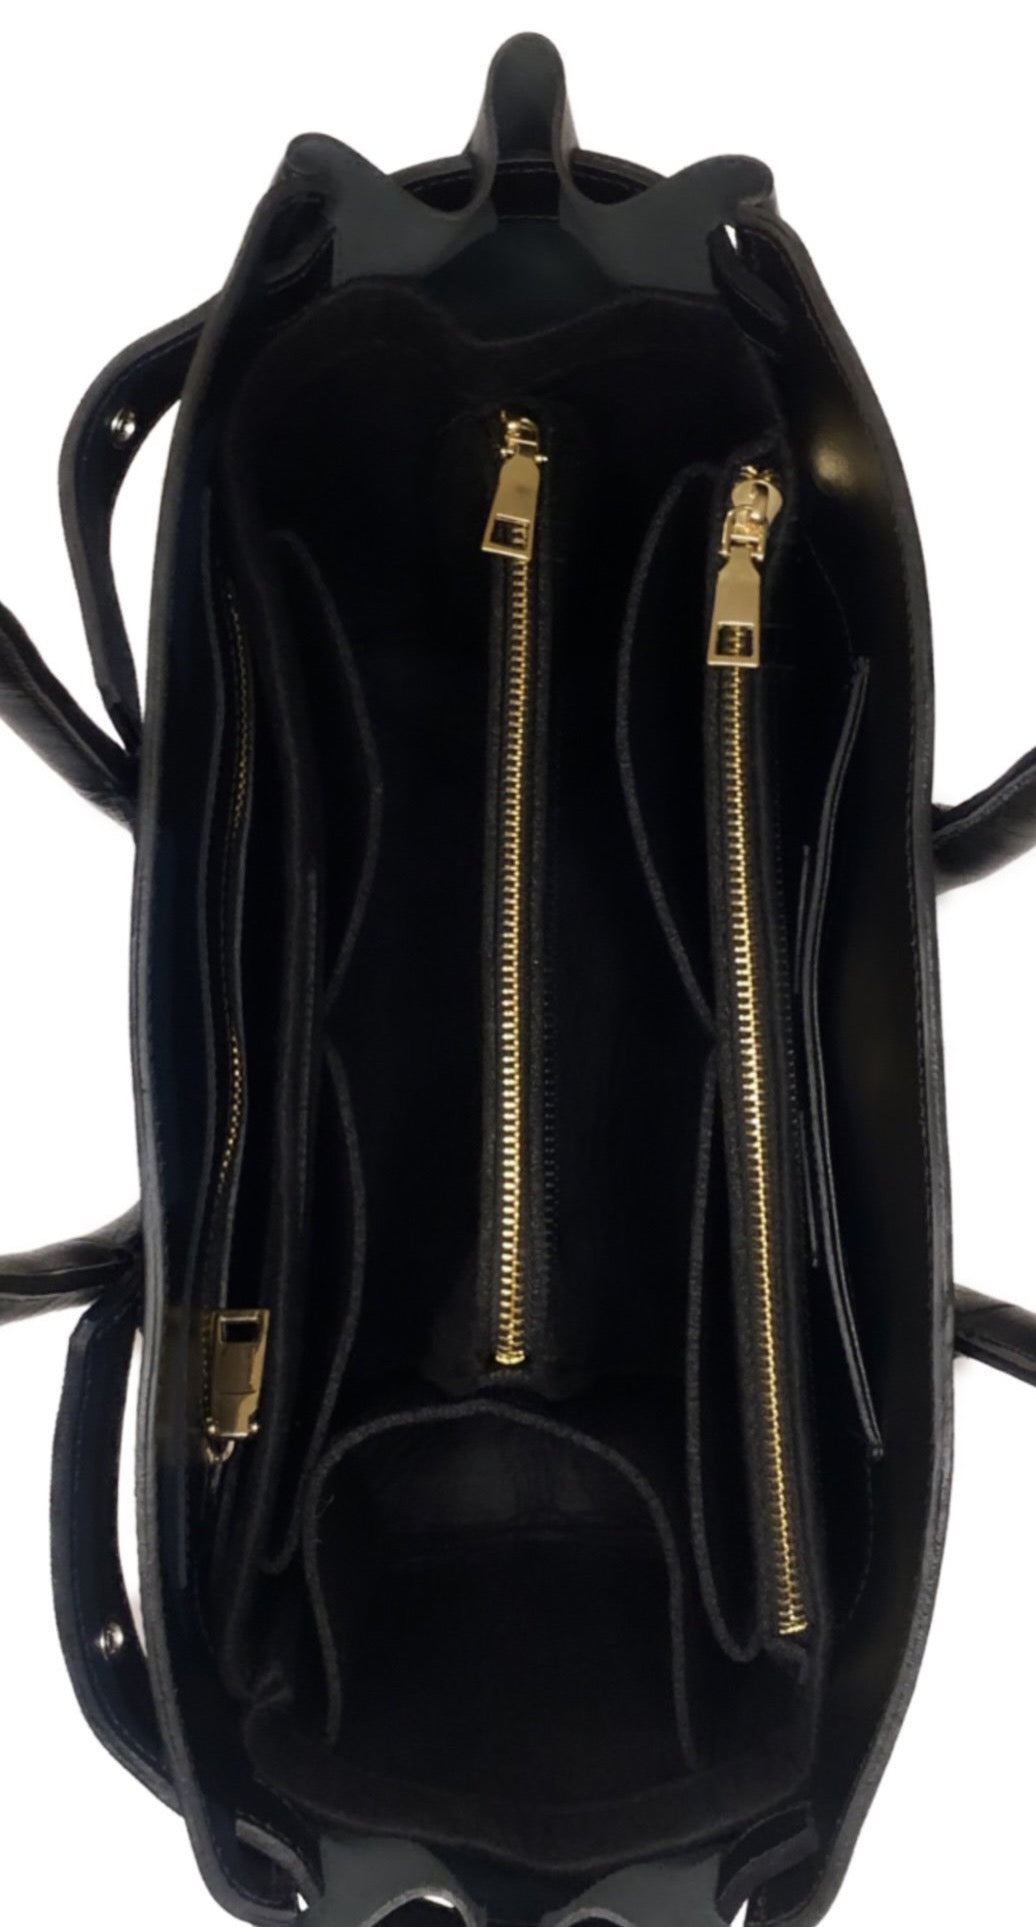 Bag Insert Organizer (Black)